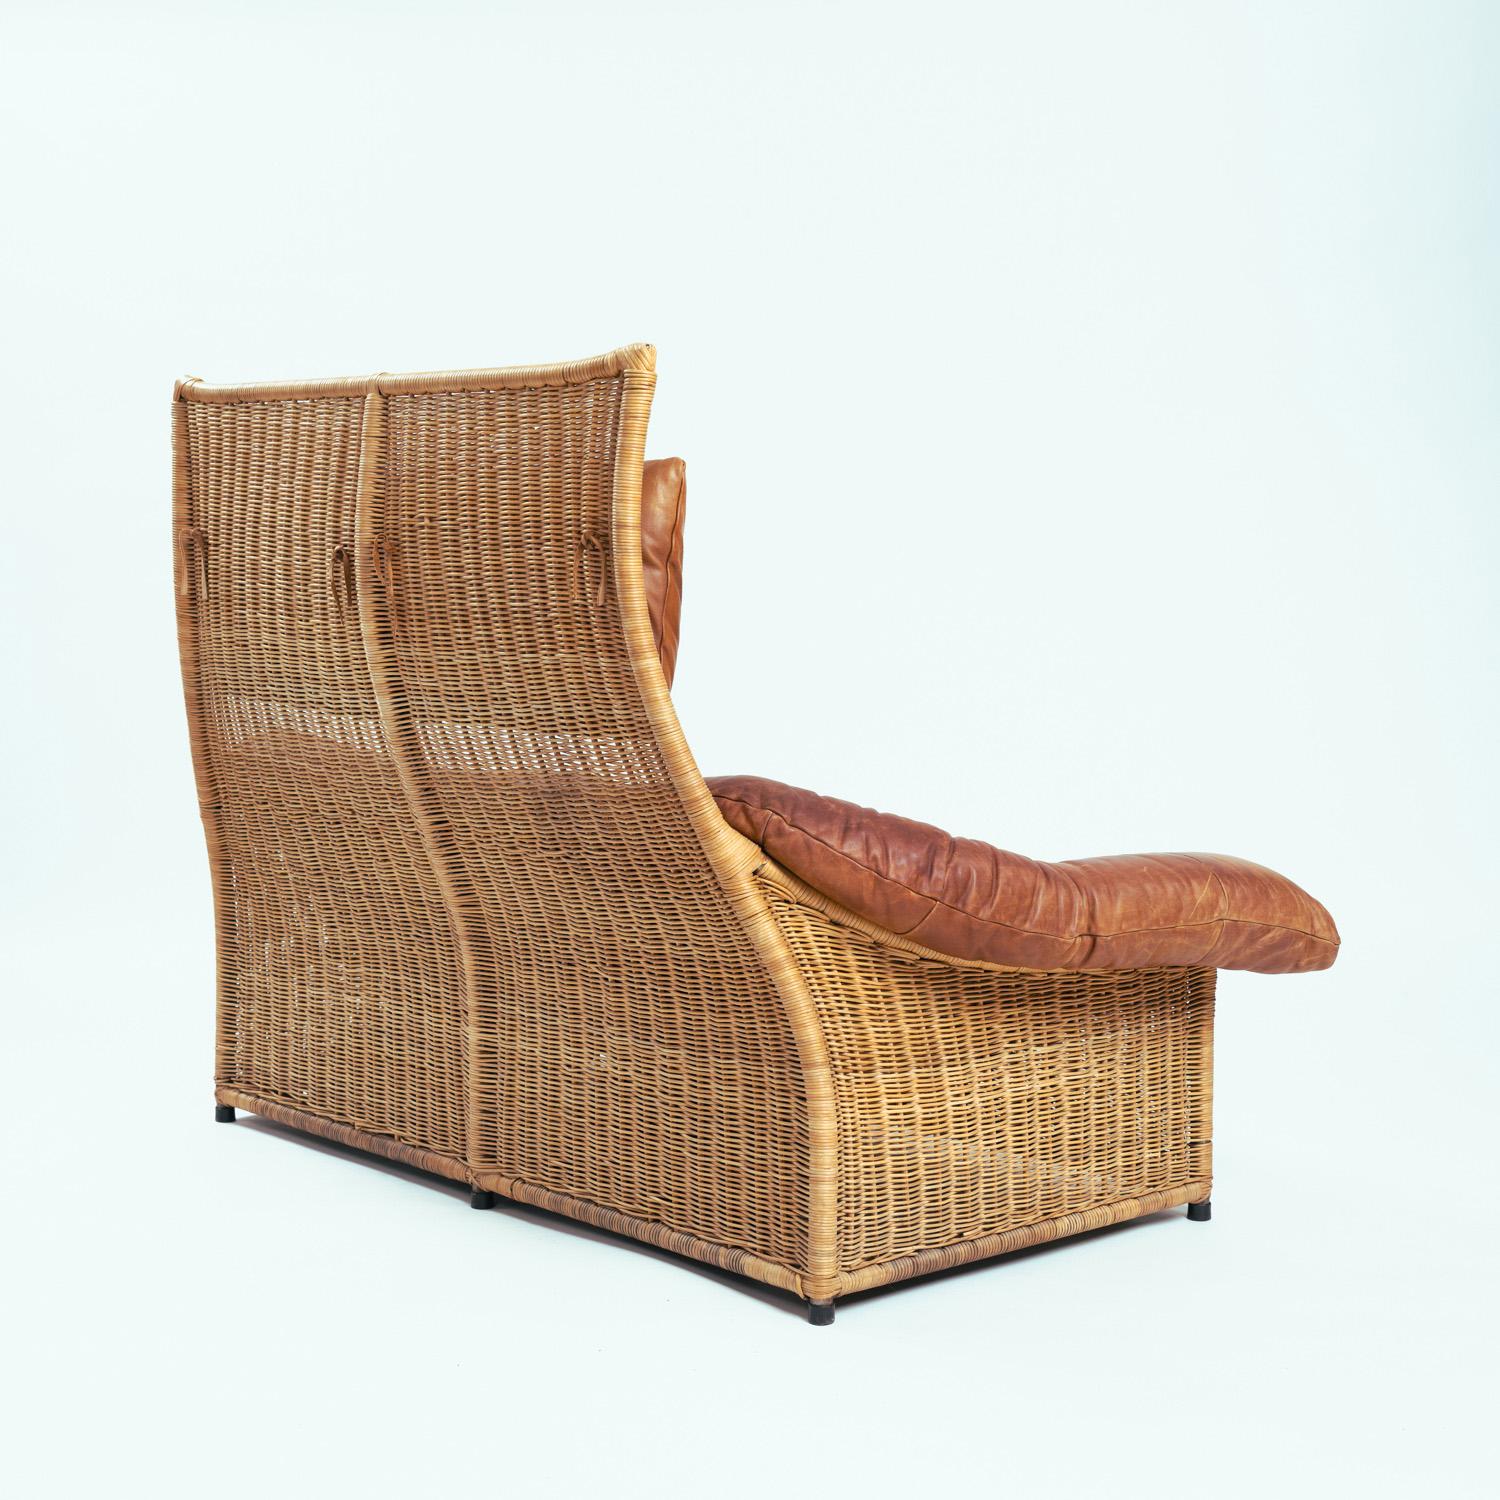 Late 20th Century Dutch The Rock Gerard van den Berg midcentury modern rattan leather 2 seat sofa For Sale